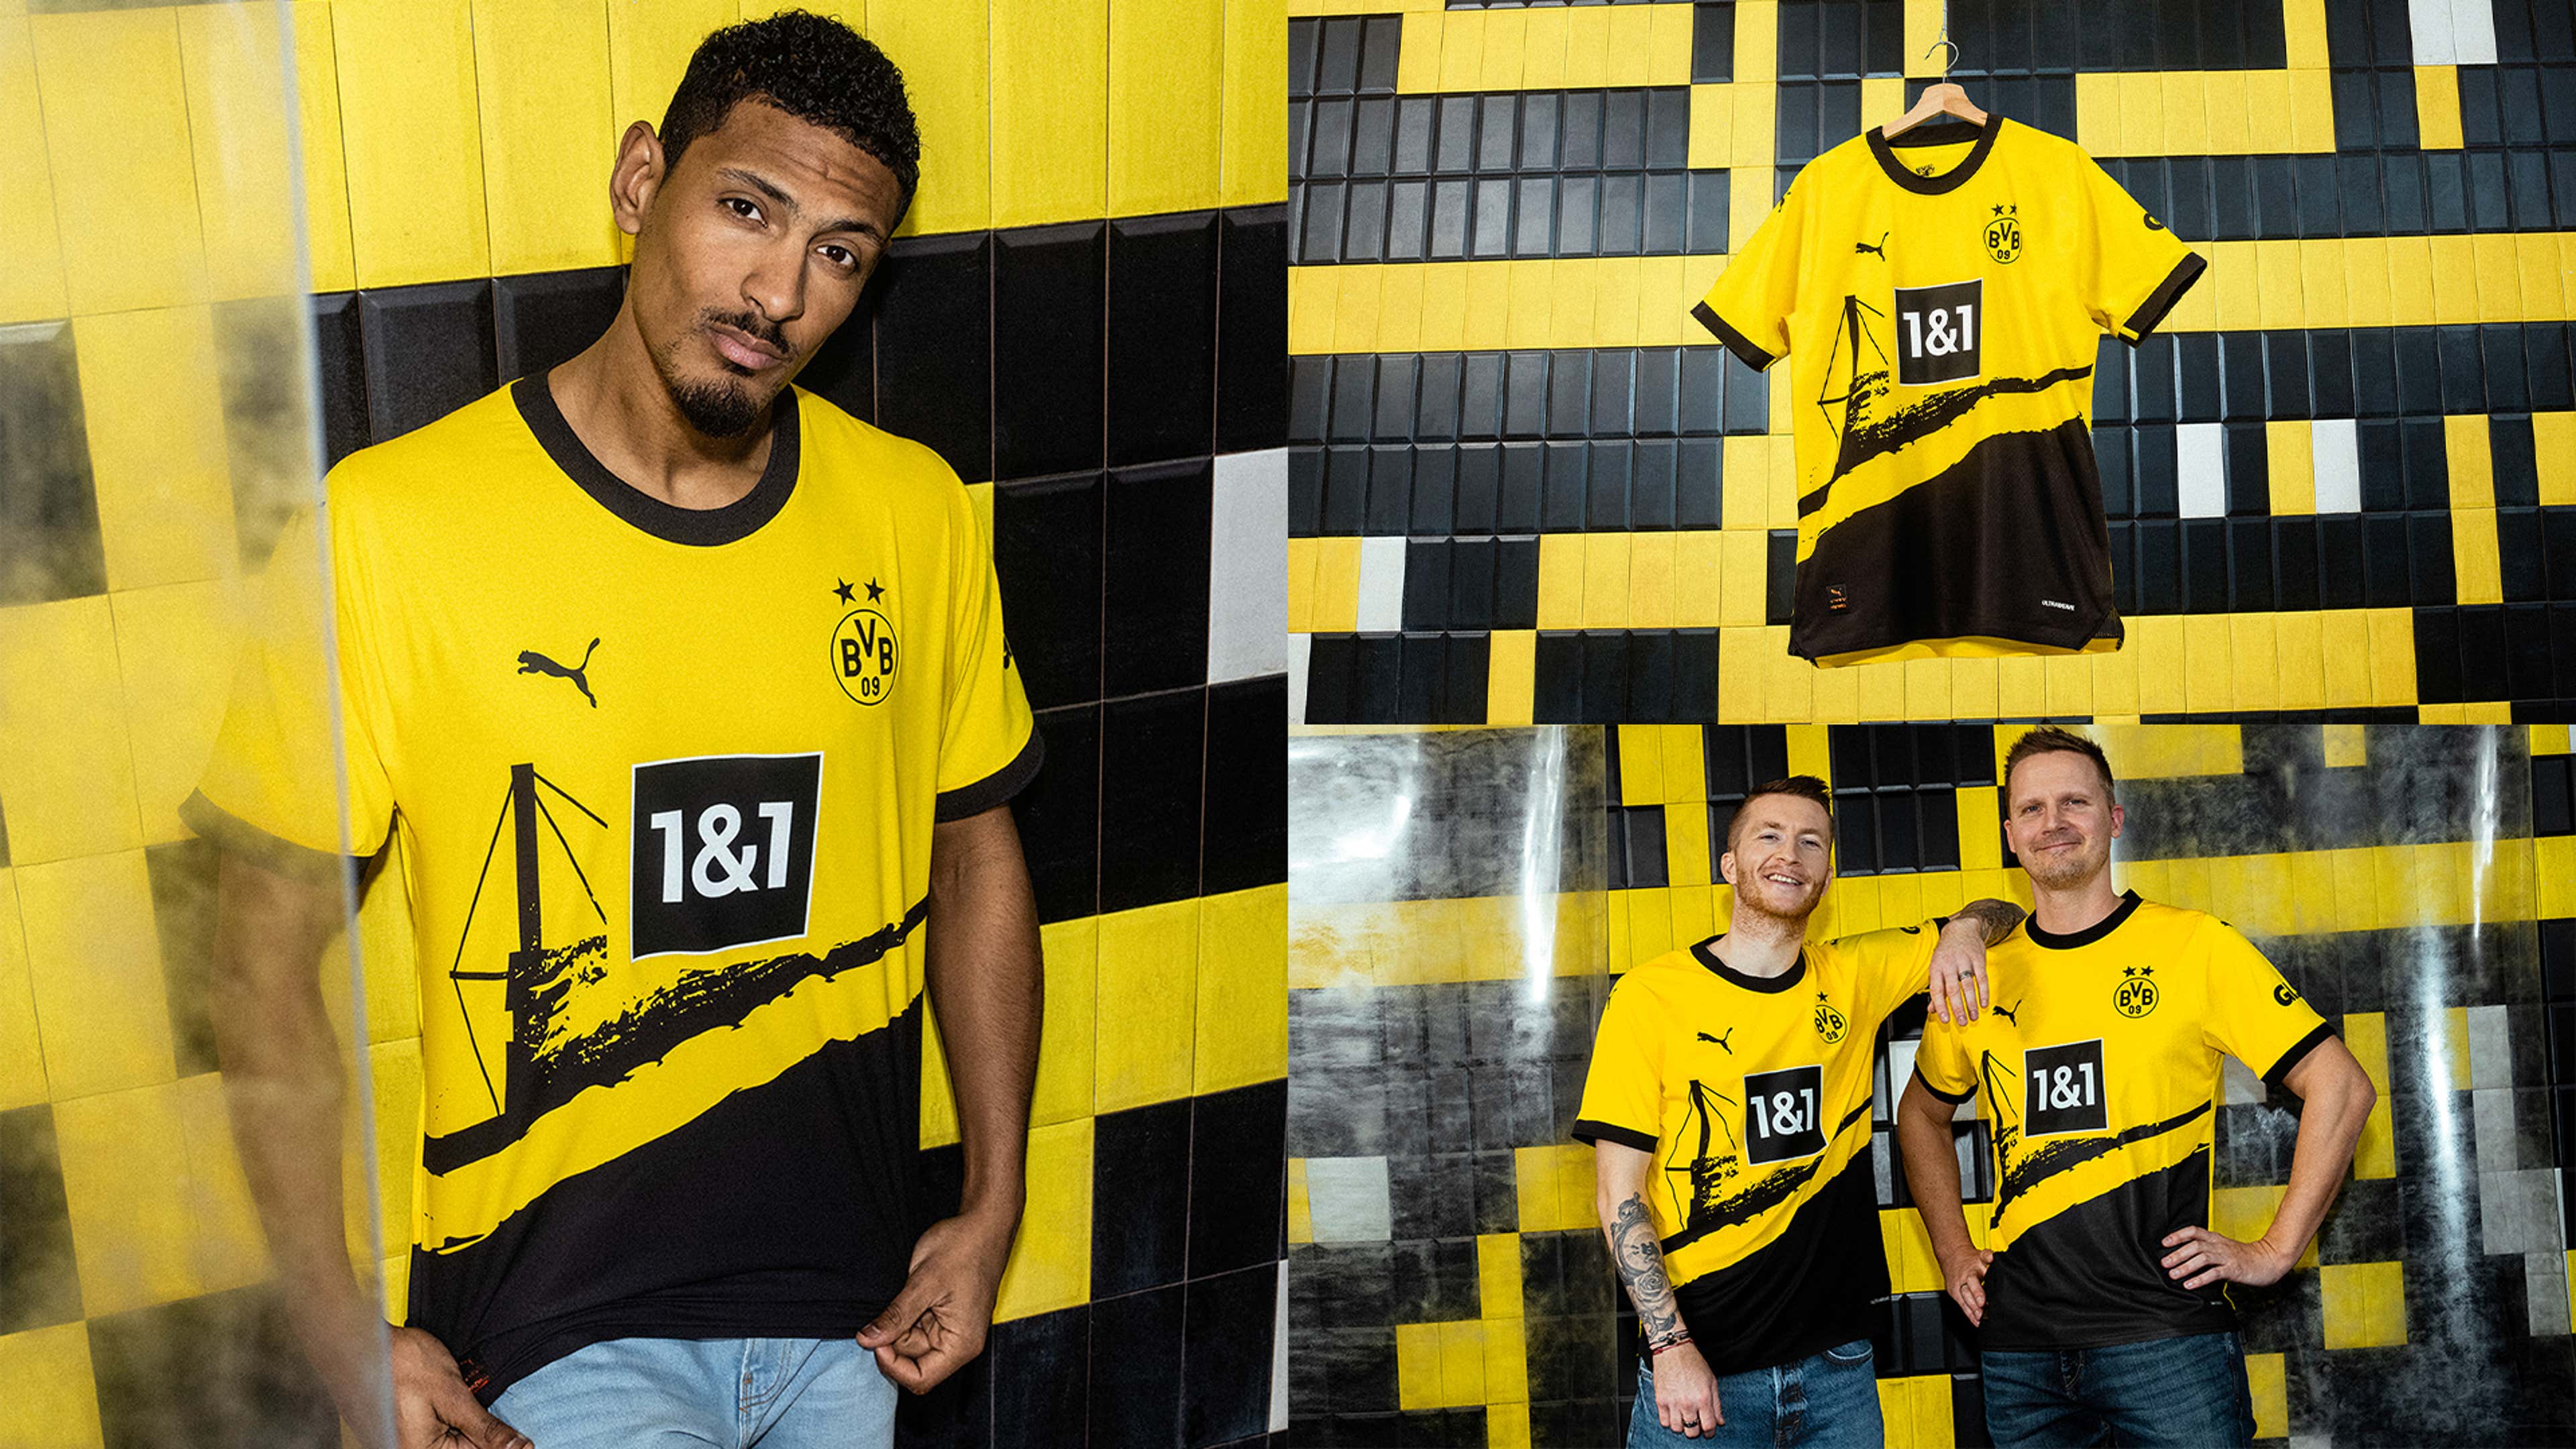 The Football Arena - Borussia Dortmund and Black Kits